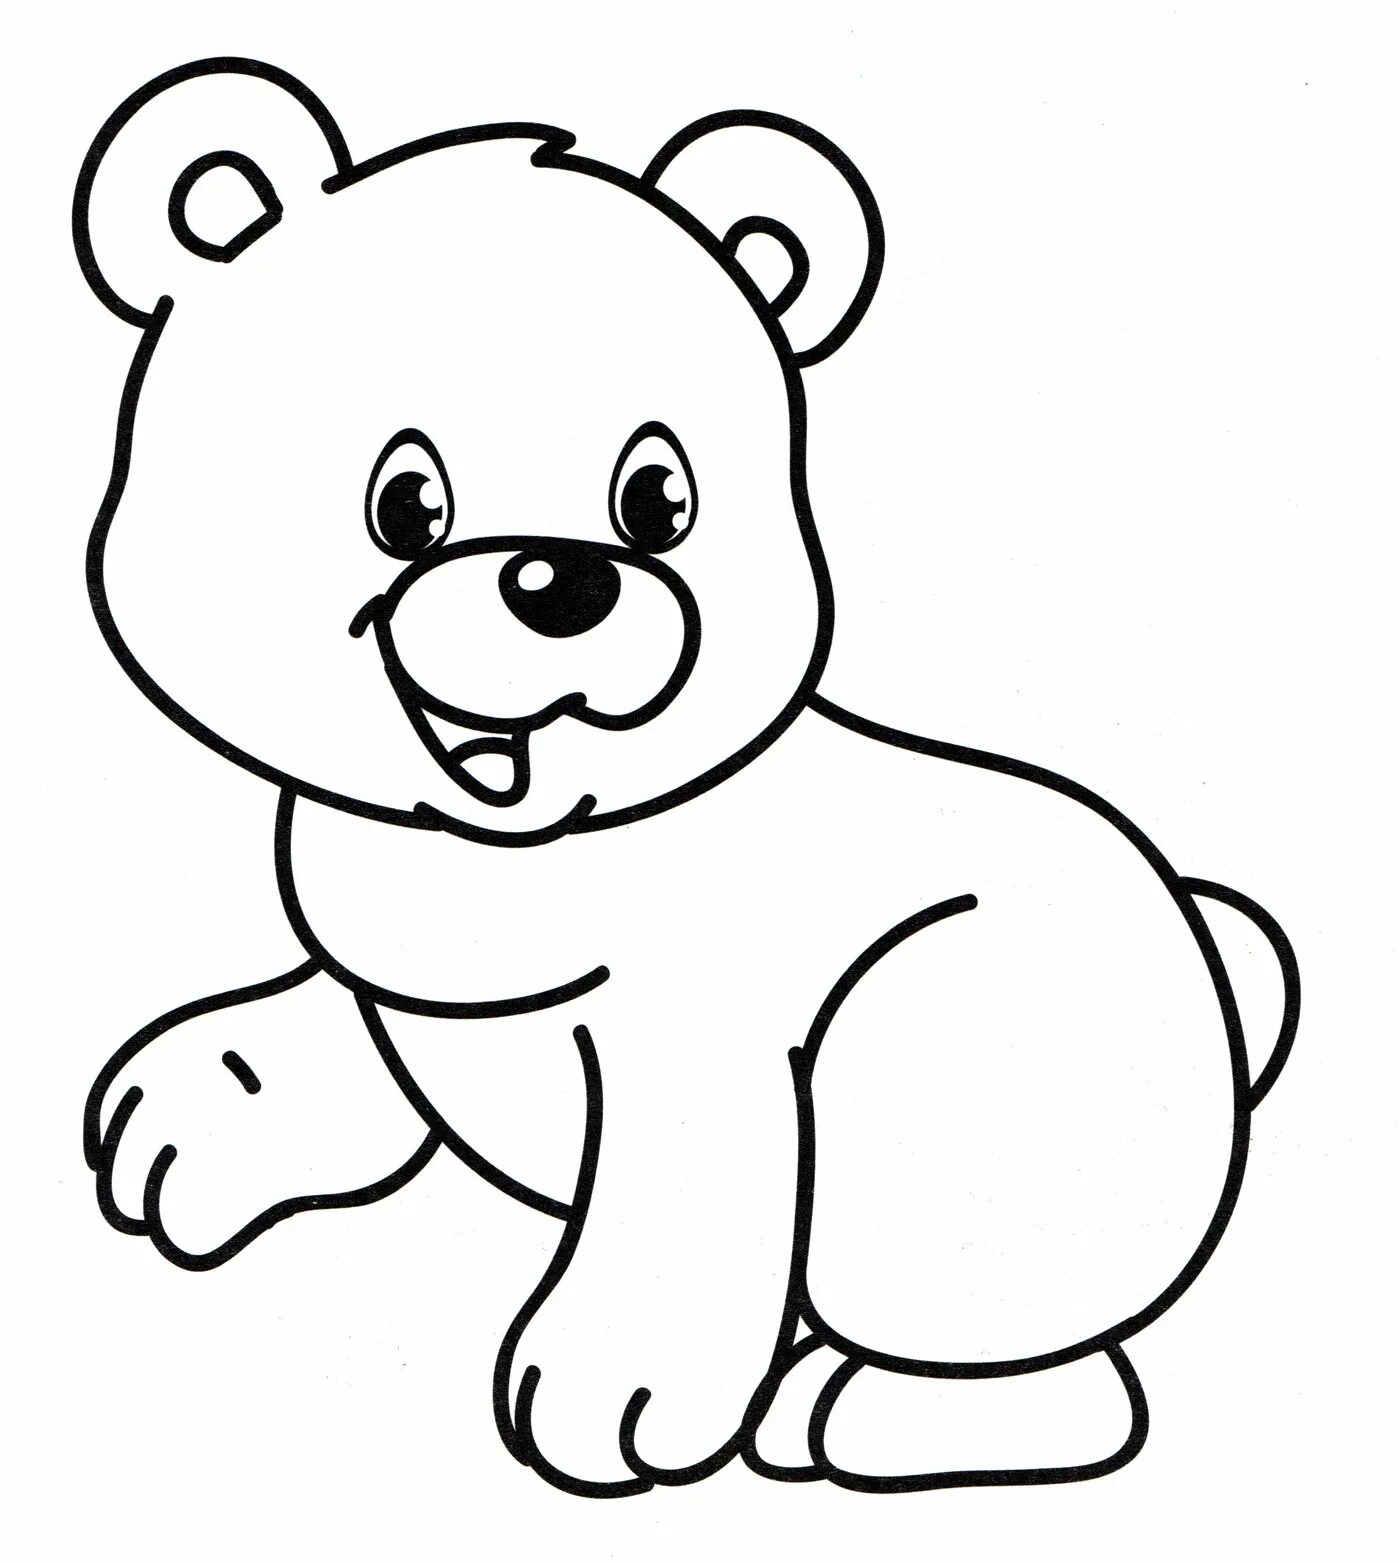 Irresistible bear drawing for kids